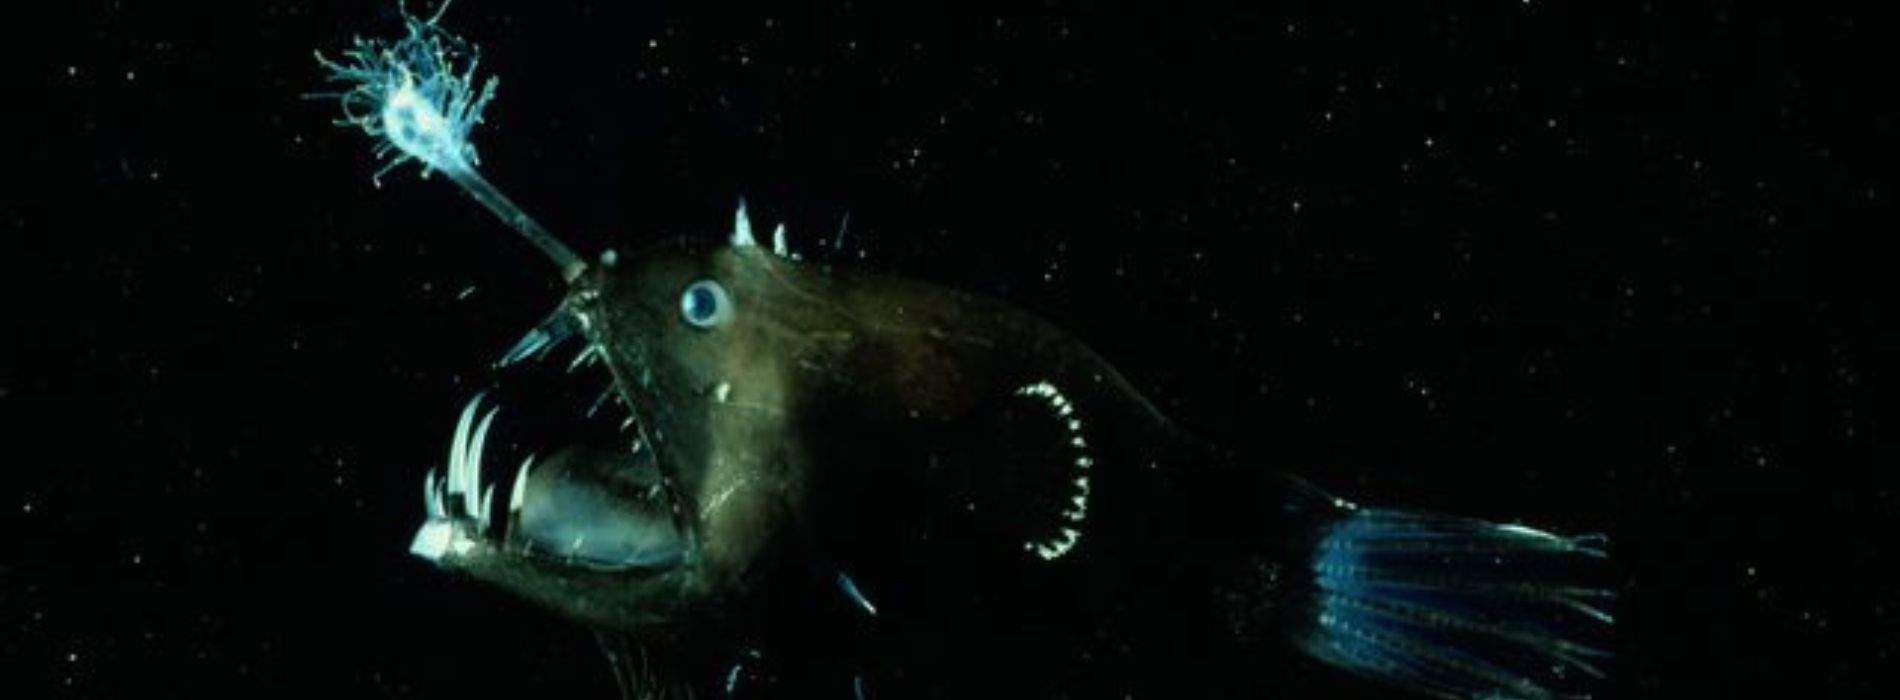 anglerfish-profile-light-shining